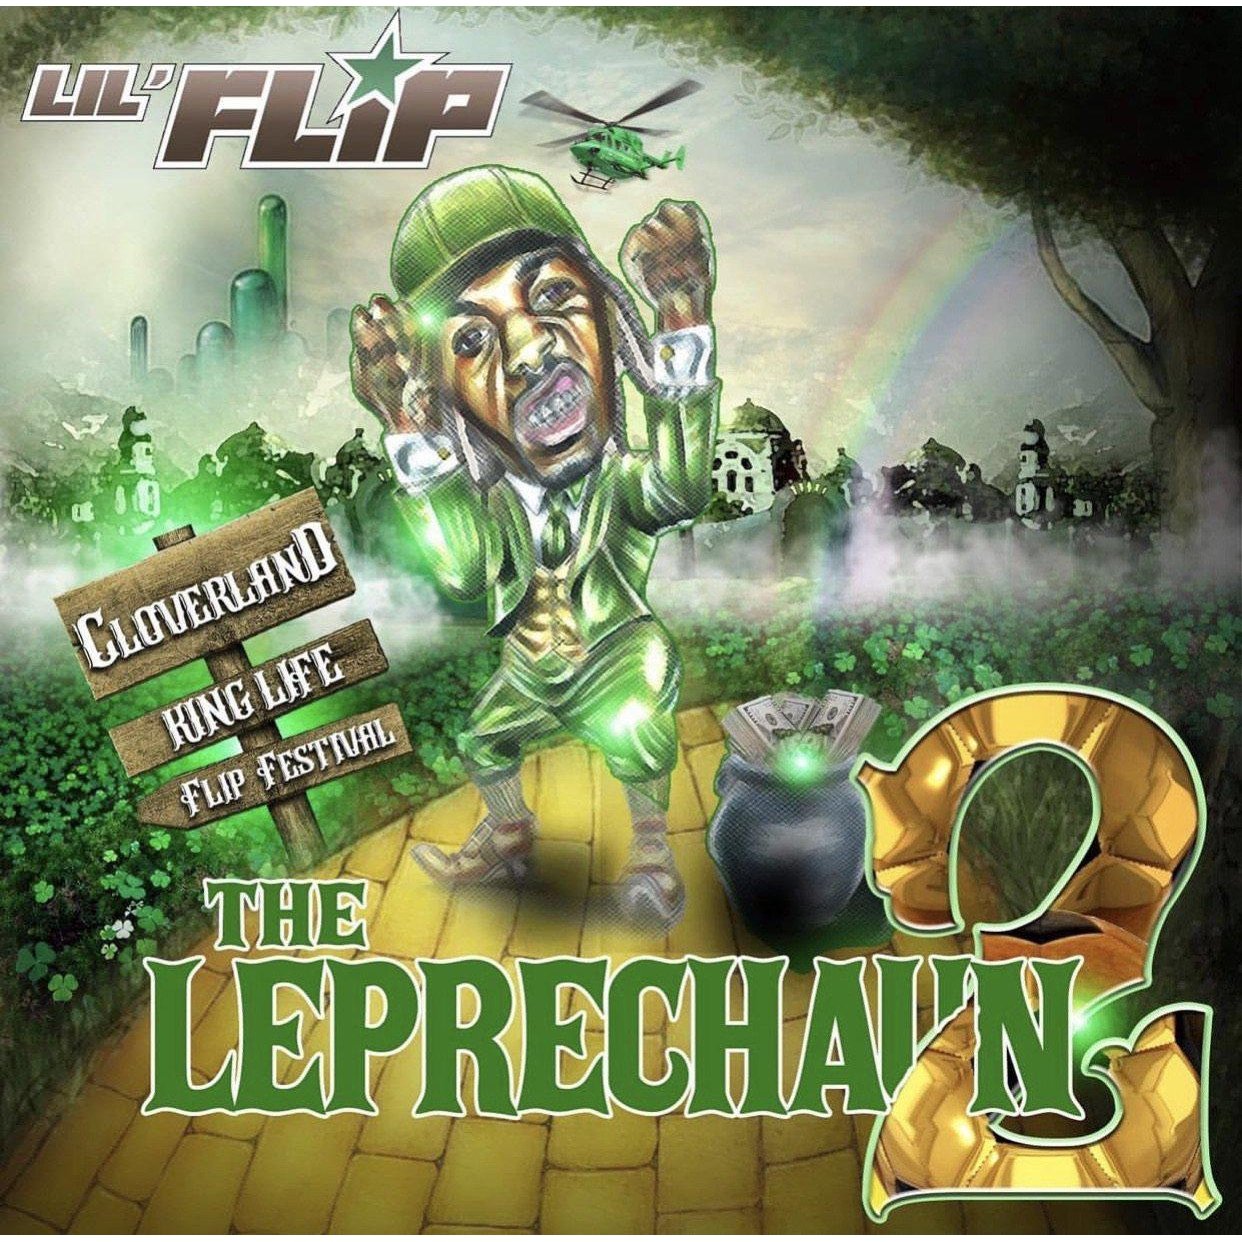 Lil Flip The Leprechaun 2 Album (Double CD)-Exotic Pop